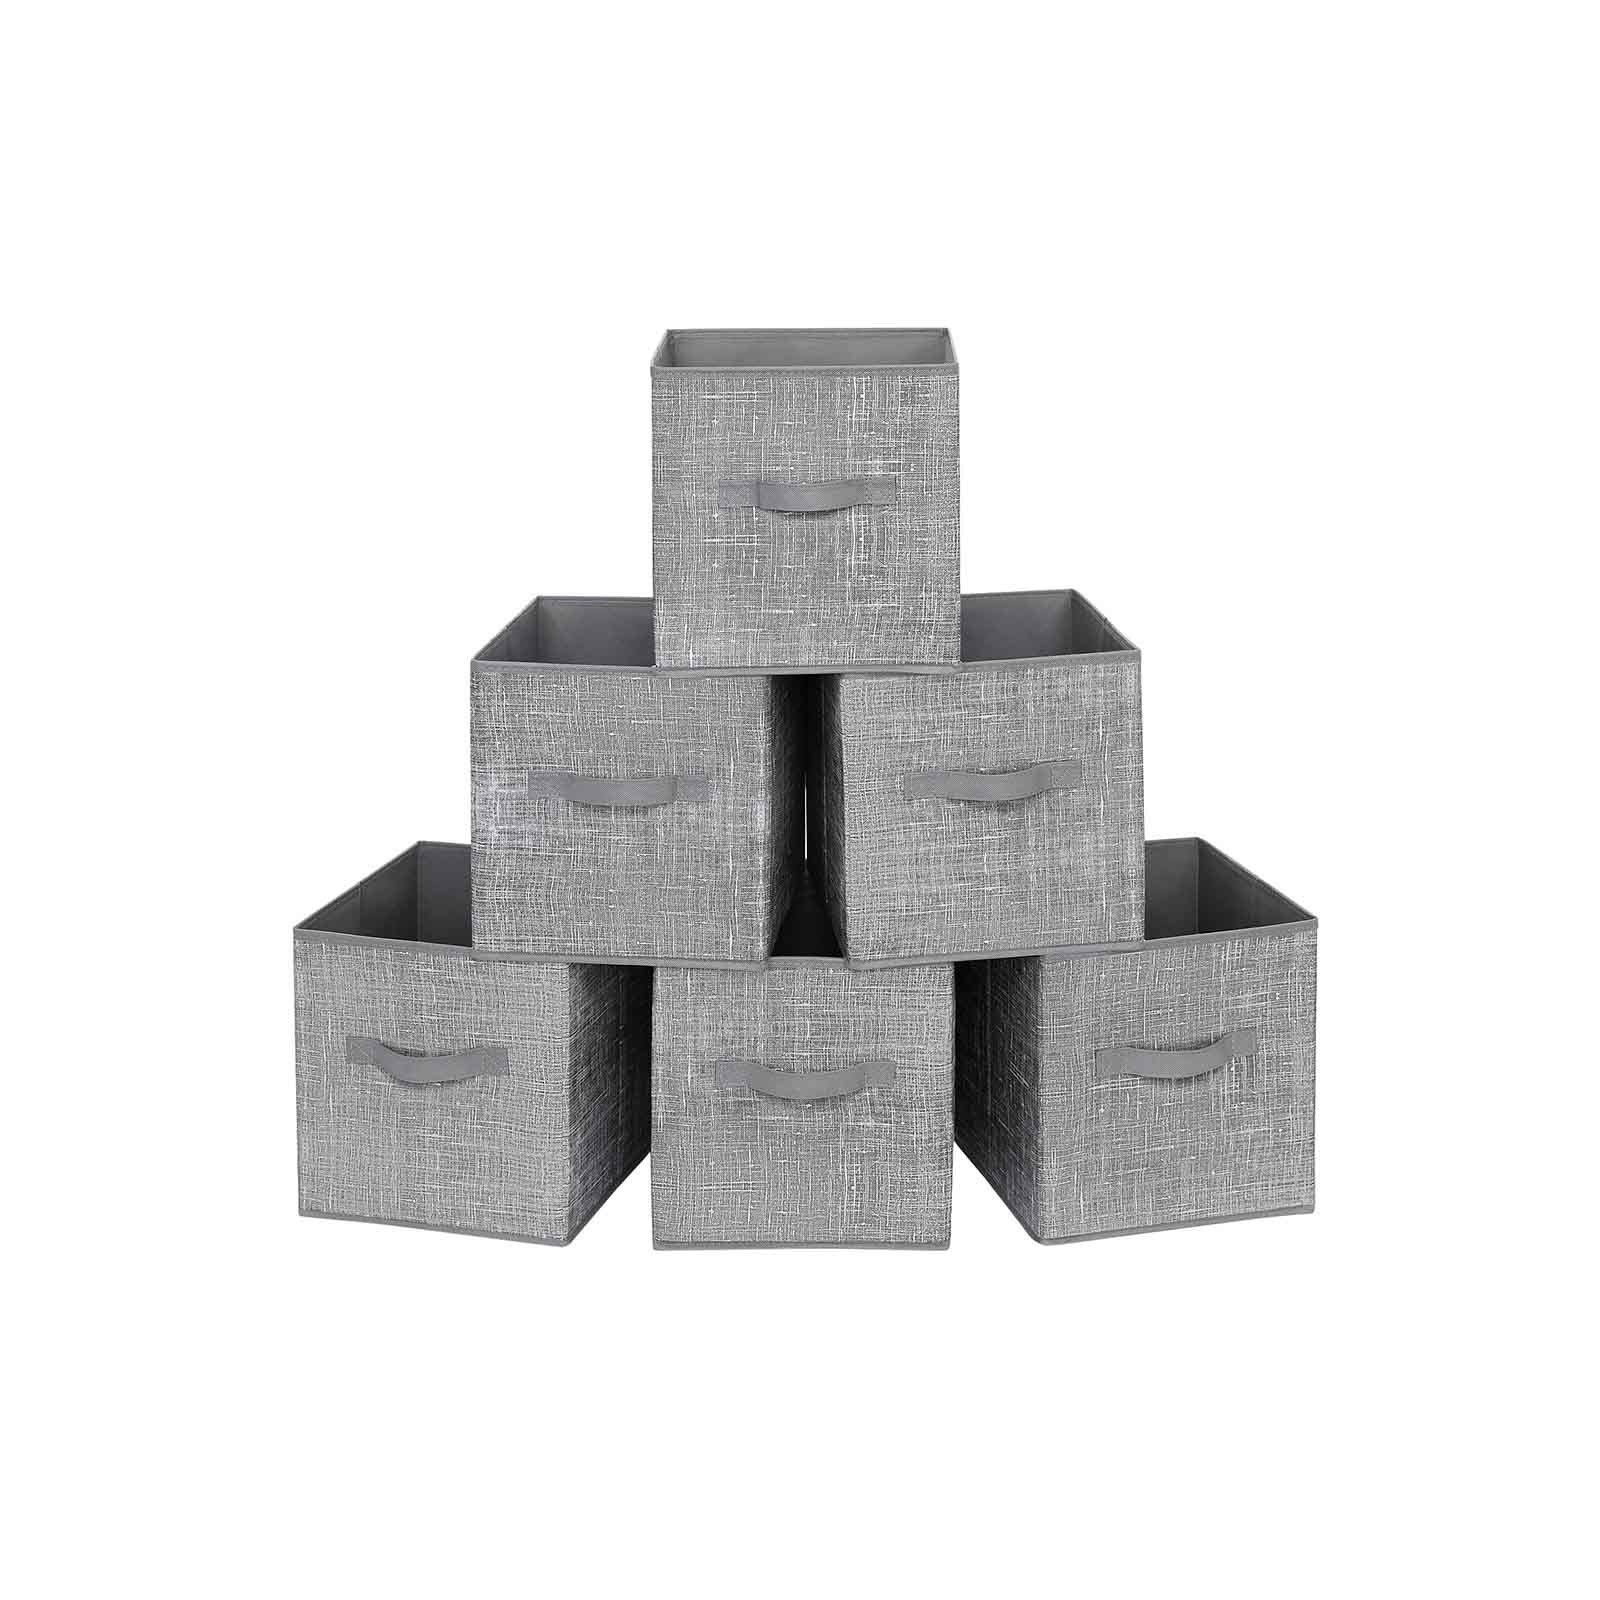 SONGMICS set of 6 Fabric Foldable storage Box Drawer Cubes with fingerhole Black 30 x 30 x 30 cm RFB02H-3 